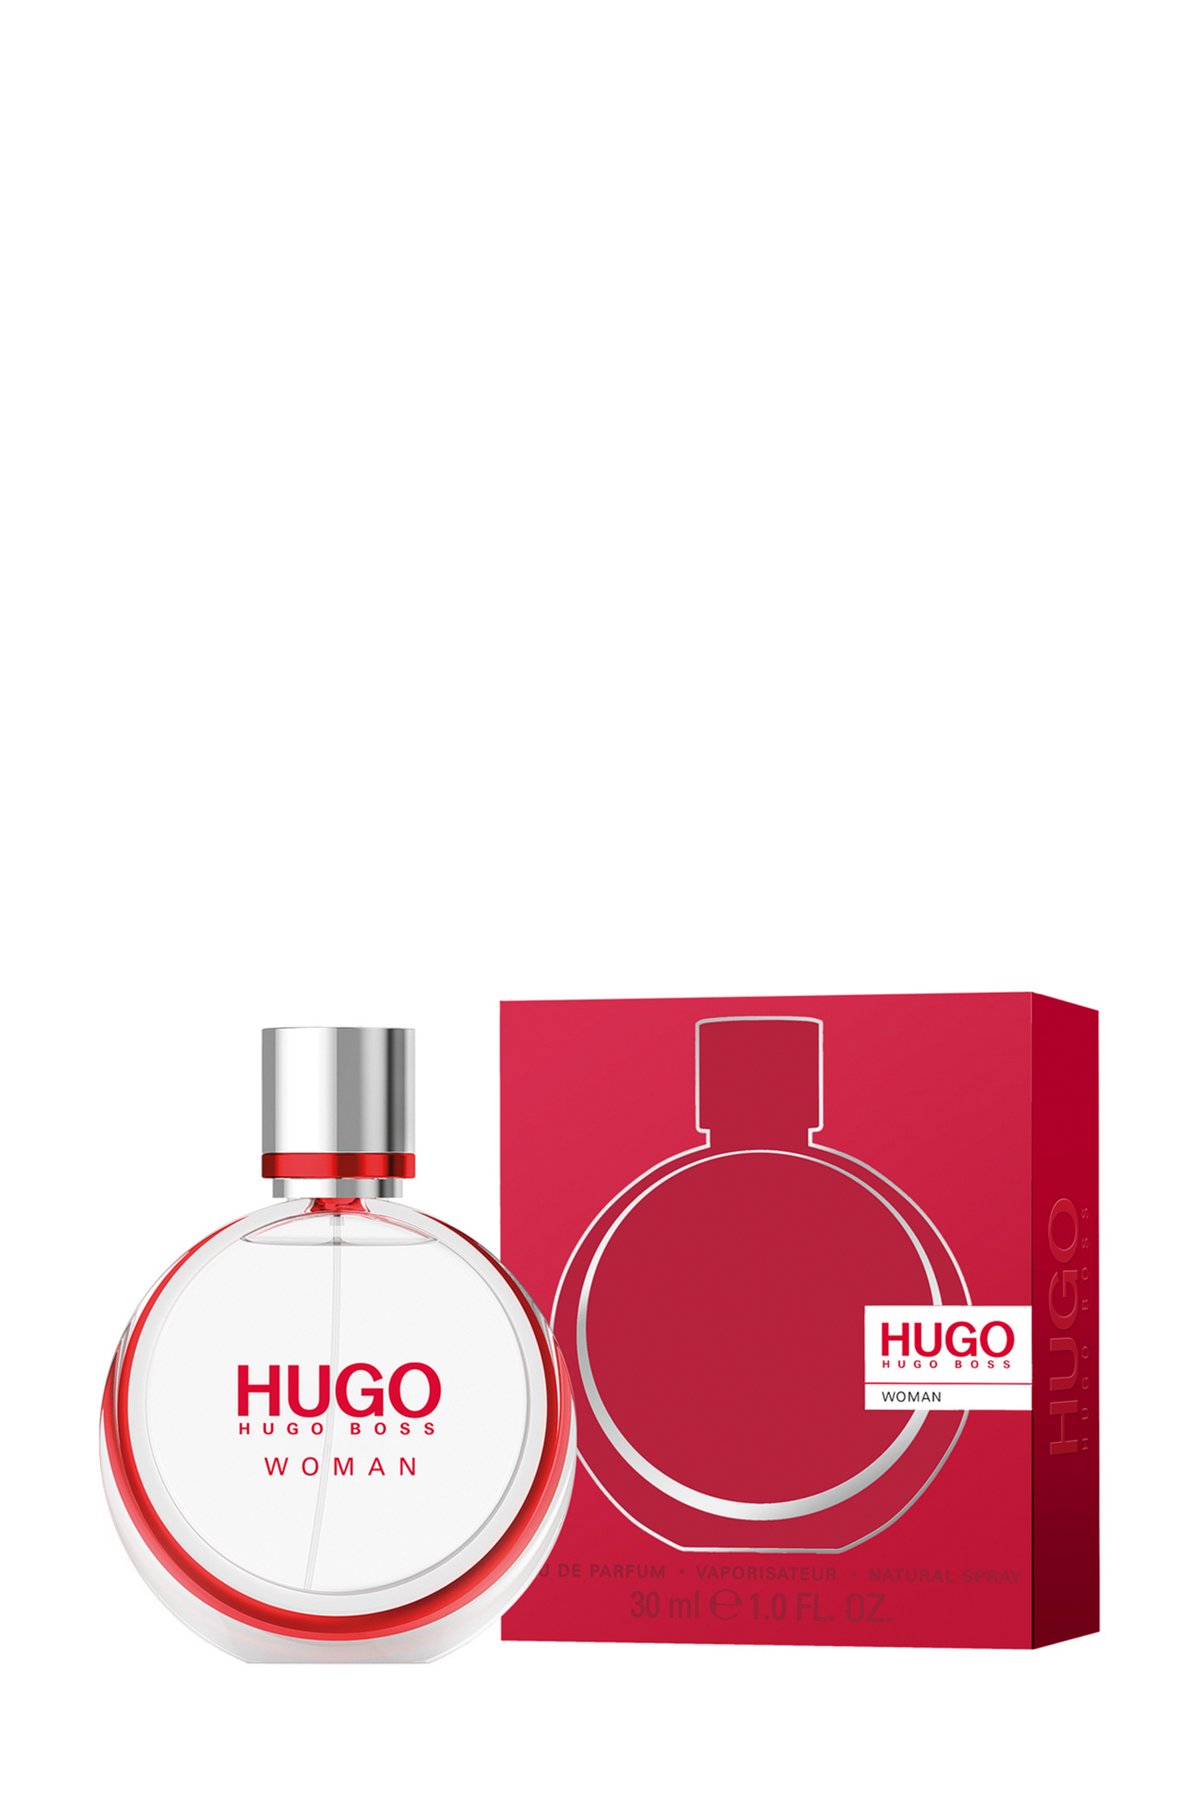 HUGO Woman Eau de Parfum 30 ml, Assorted-Pre-Pack